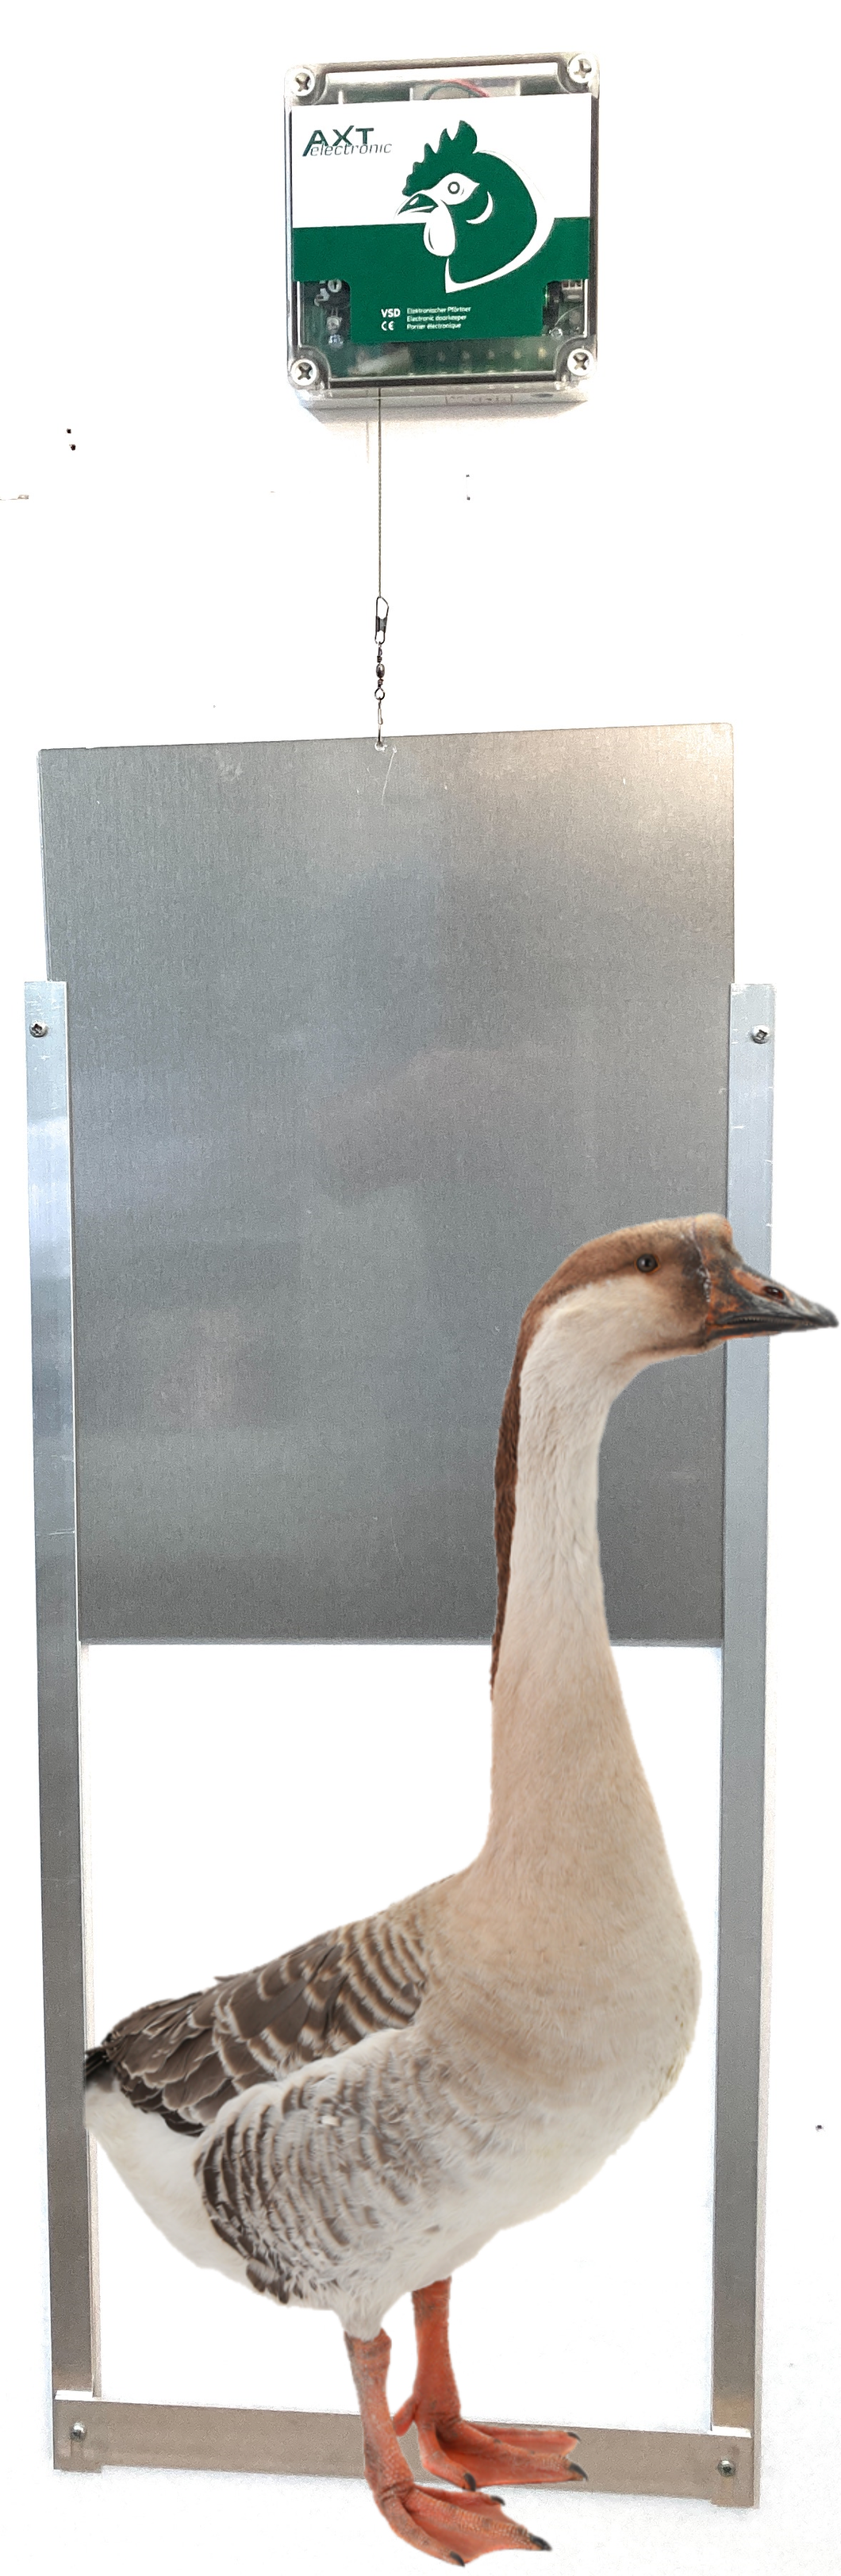 Automatic Goose Door Opener - Complete Kit - World's Largest Poultry Door-Cheeper Keeper